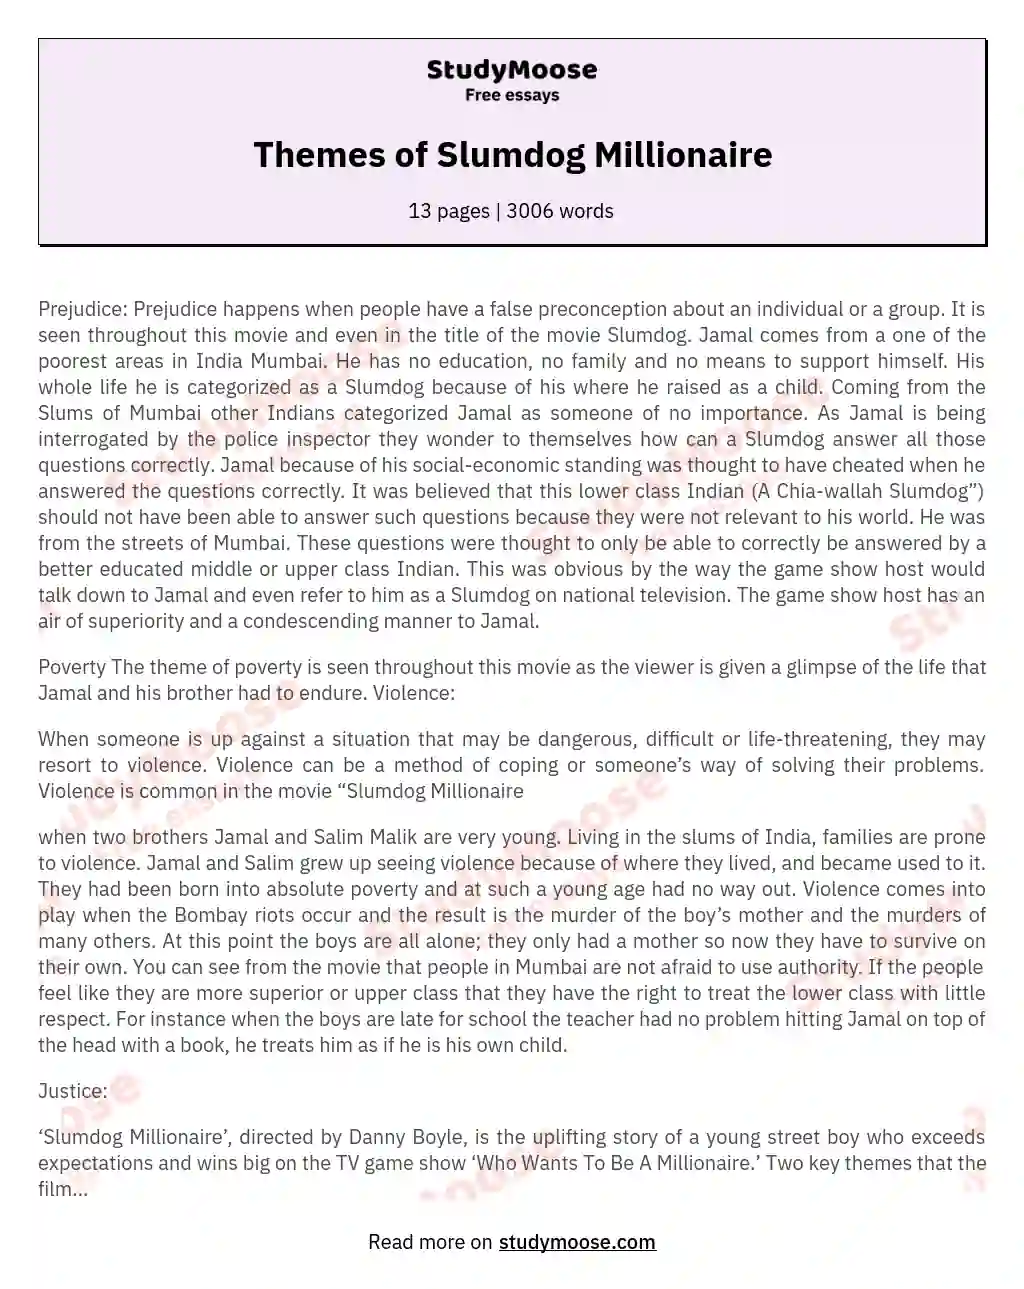 Themes of Slumdog Millionaire essay